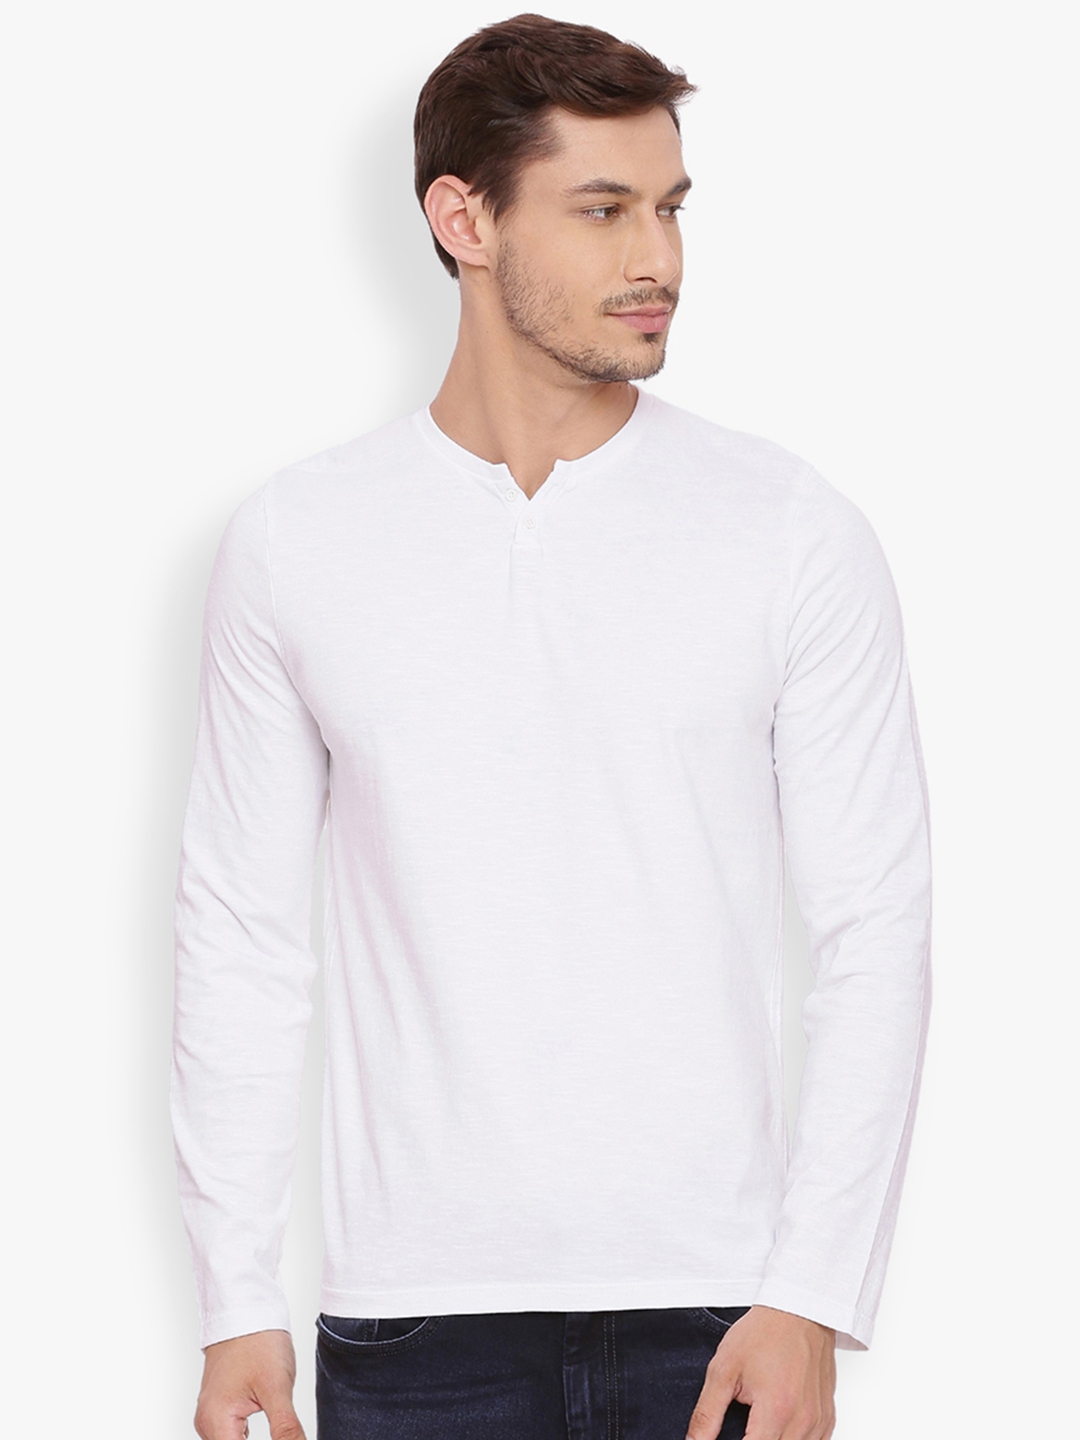 Buy Basics Men White Solid Henley Neck T Shirt - Tshirts for Men ...